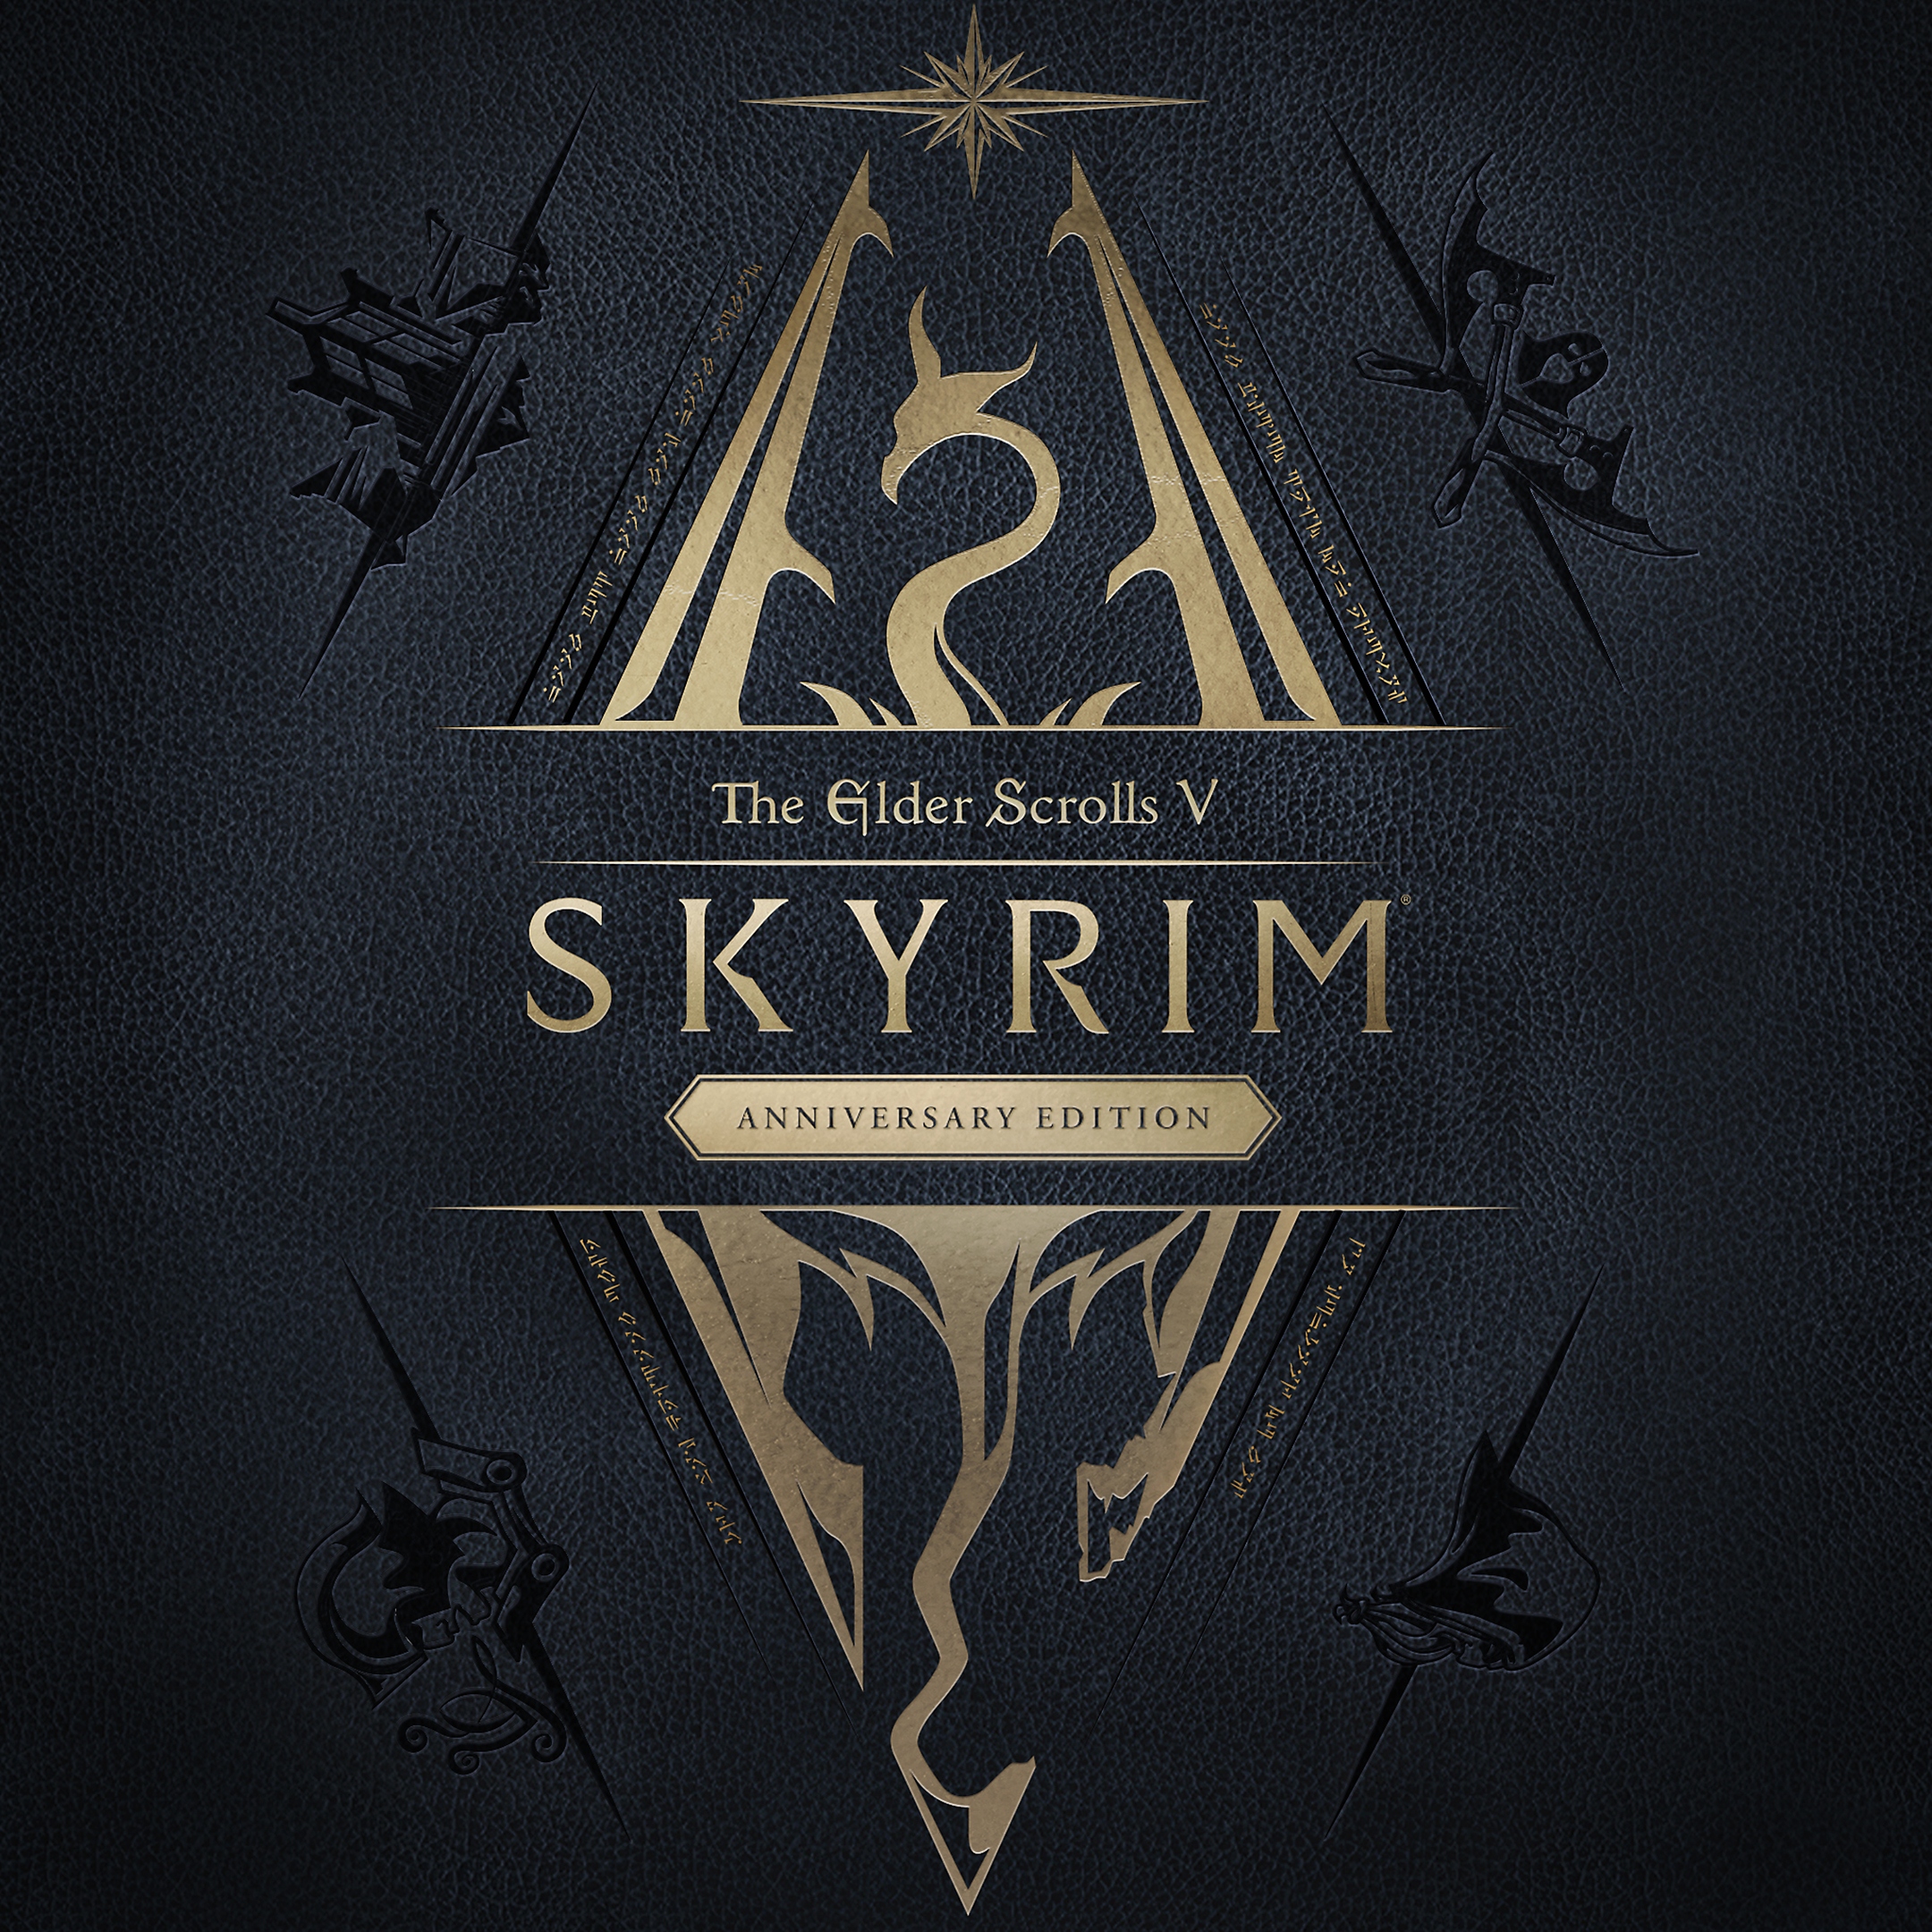 The Elder Scrolls V: Skyrim Anniversary Edition – pakkebilde